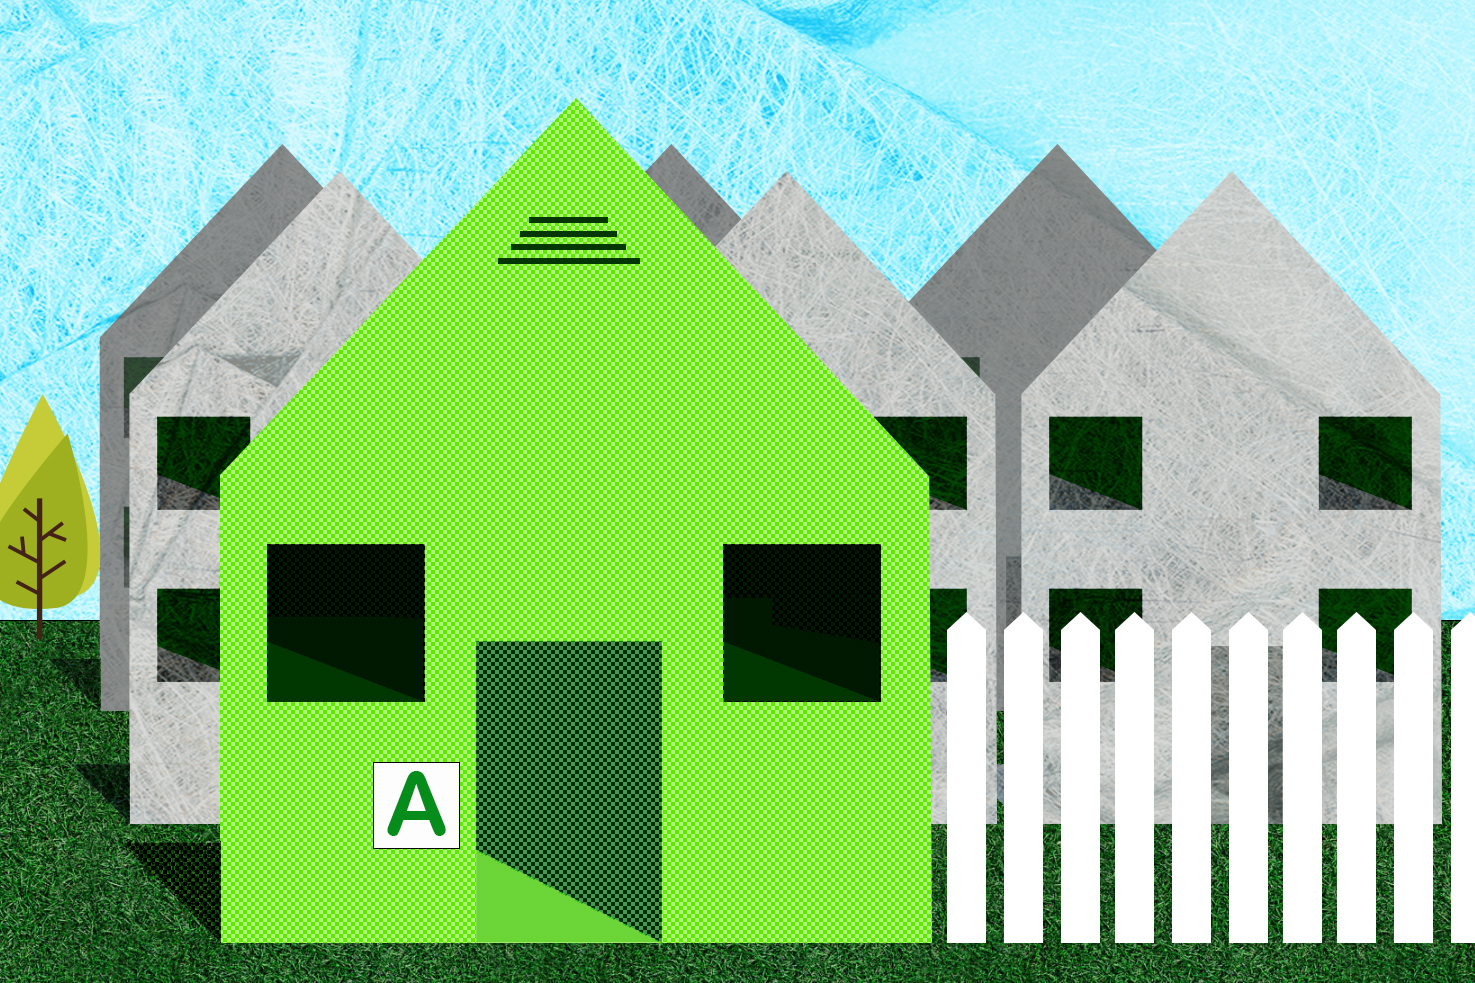 Ekotrope makes building energy-efficient homes easier